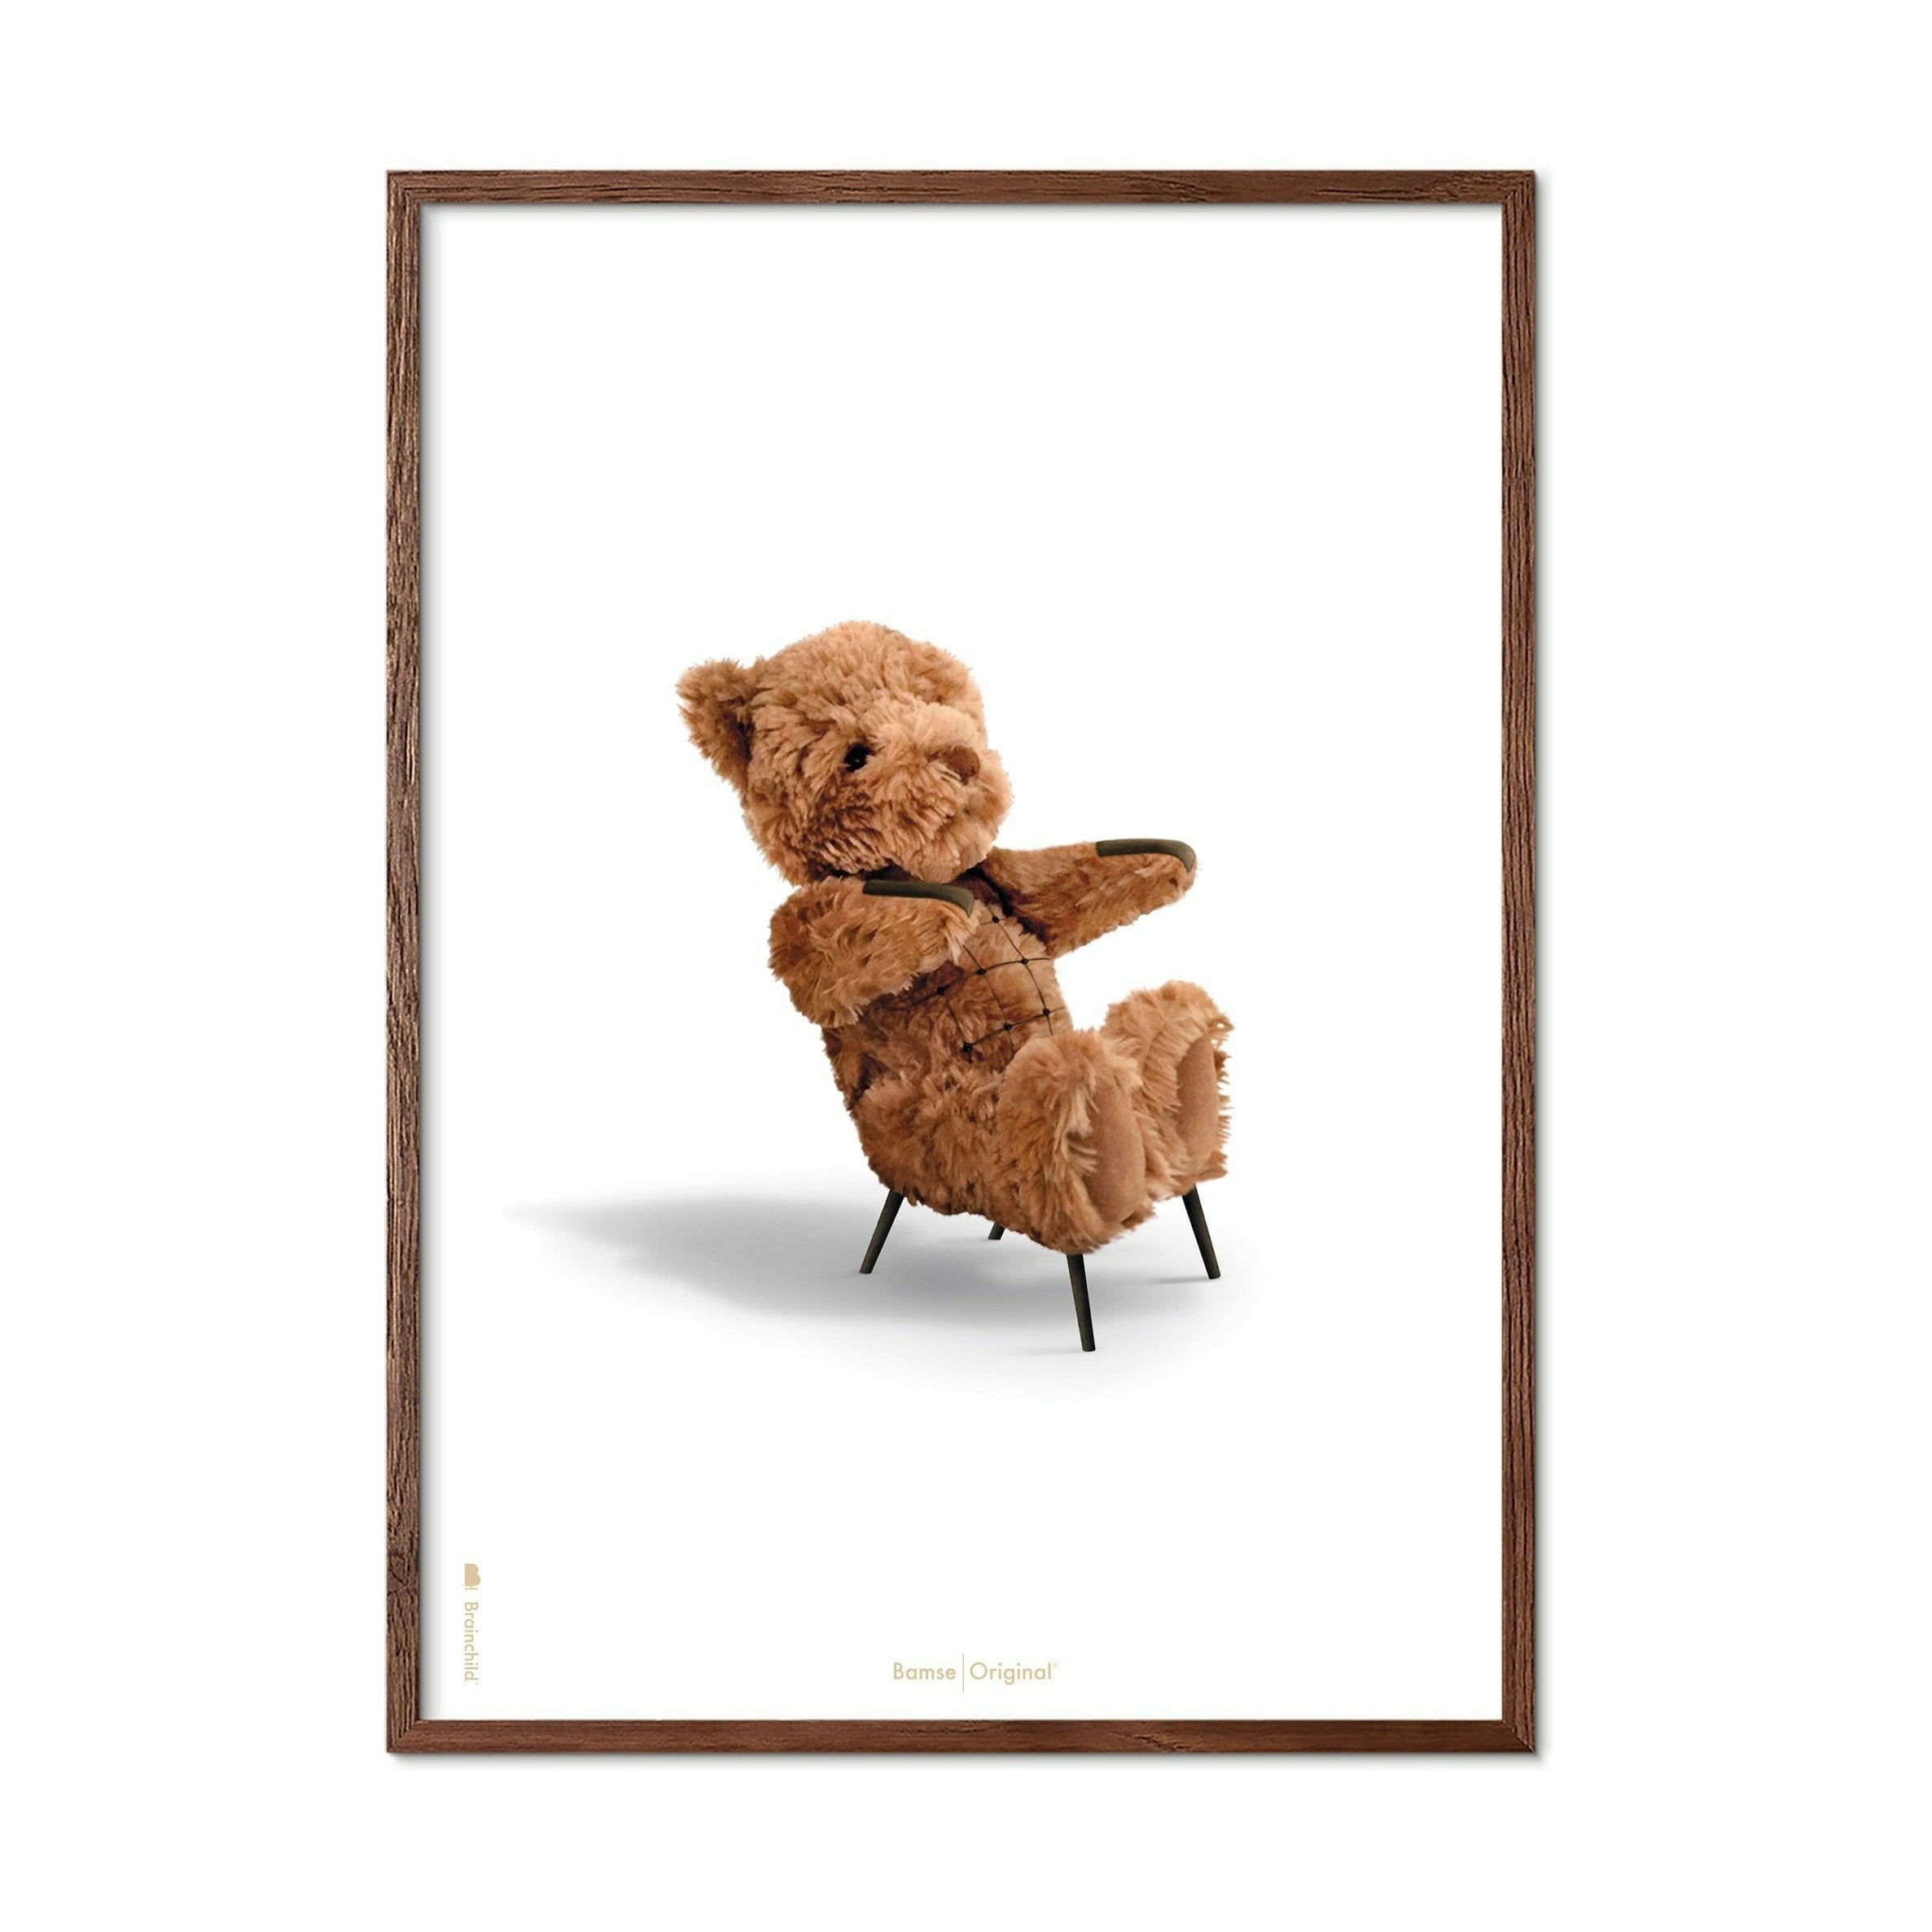 Brainchild Teddy Bear Classic Poster, Frame Made Of Dark Wood 30x40 Cm, White Background